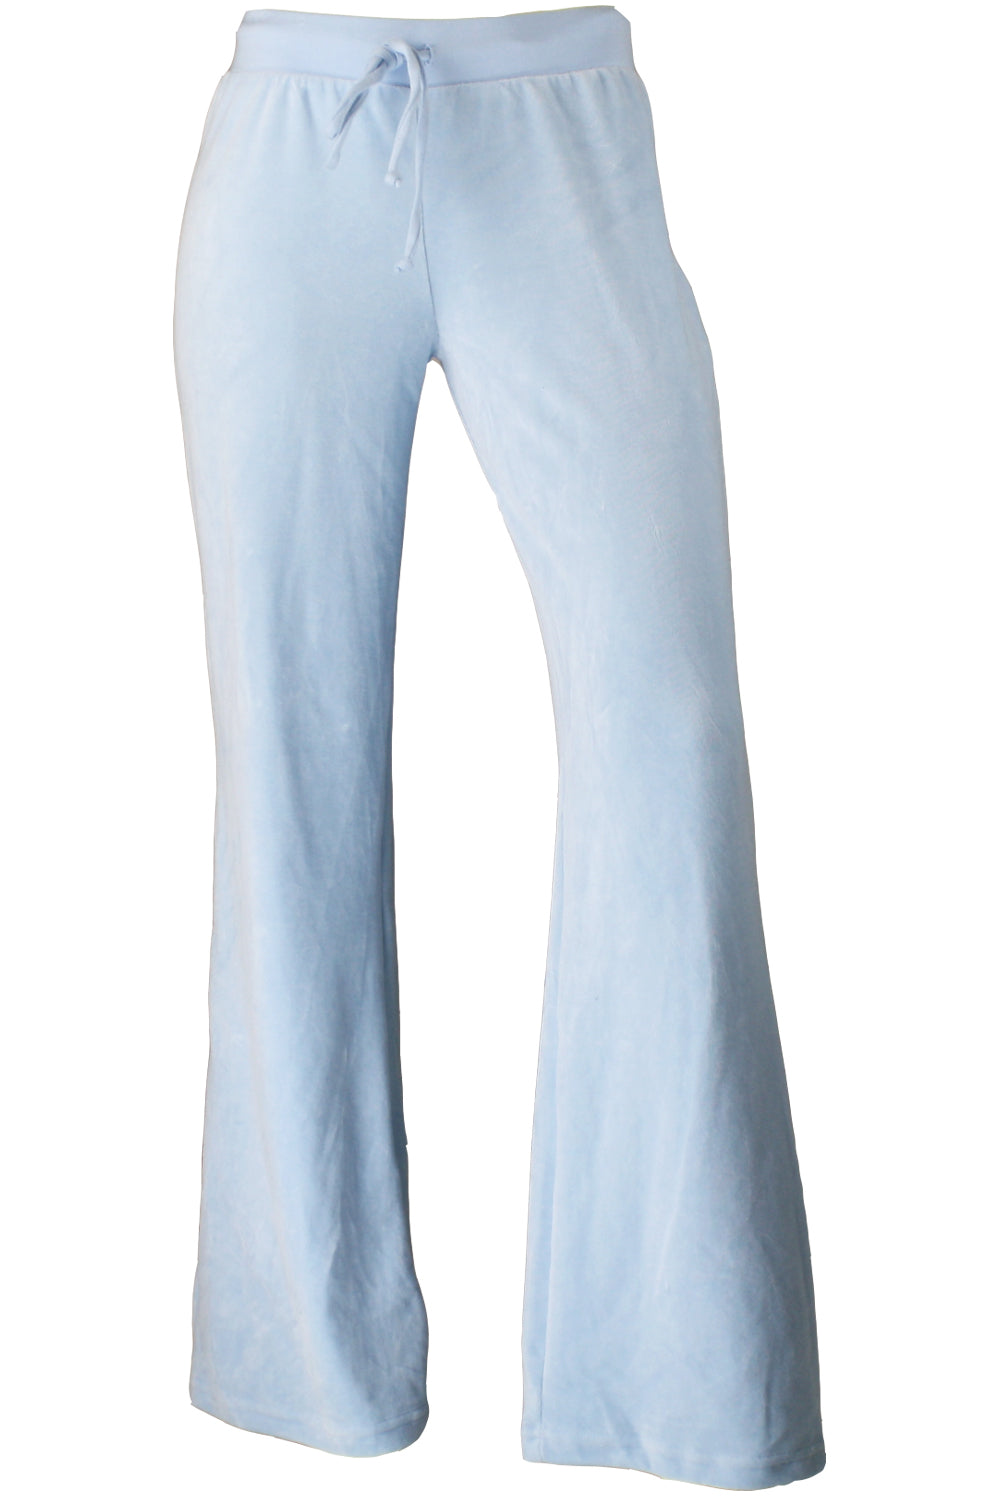 Heather grey velvet Tivia Pant trousers